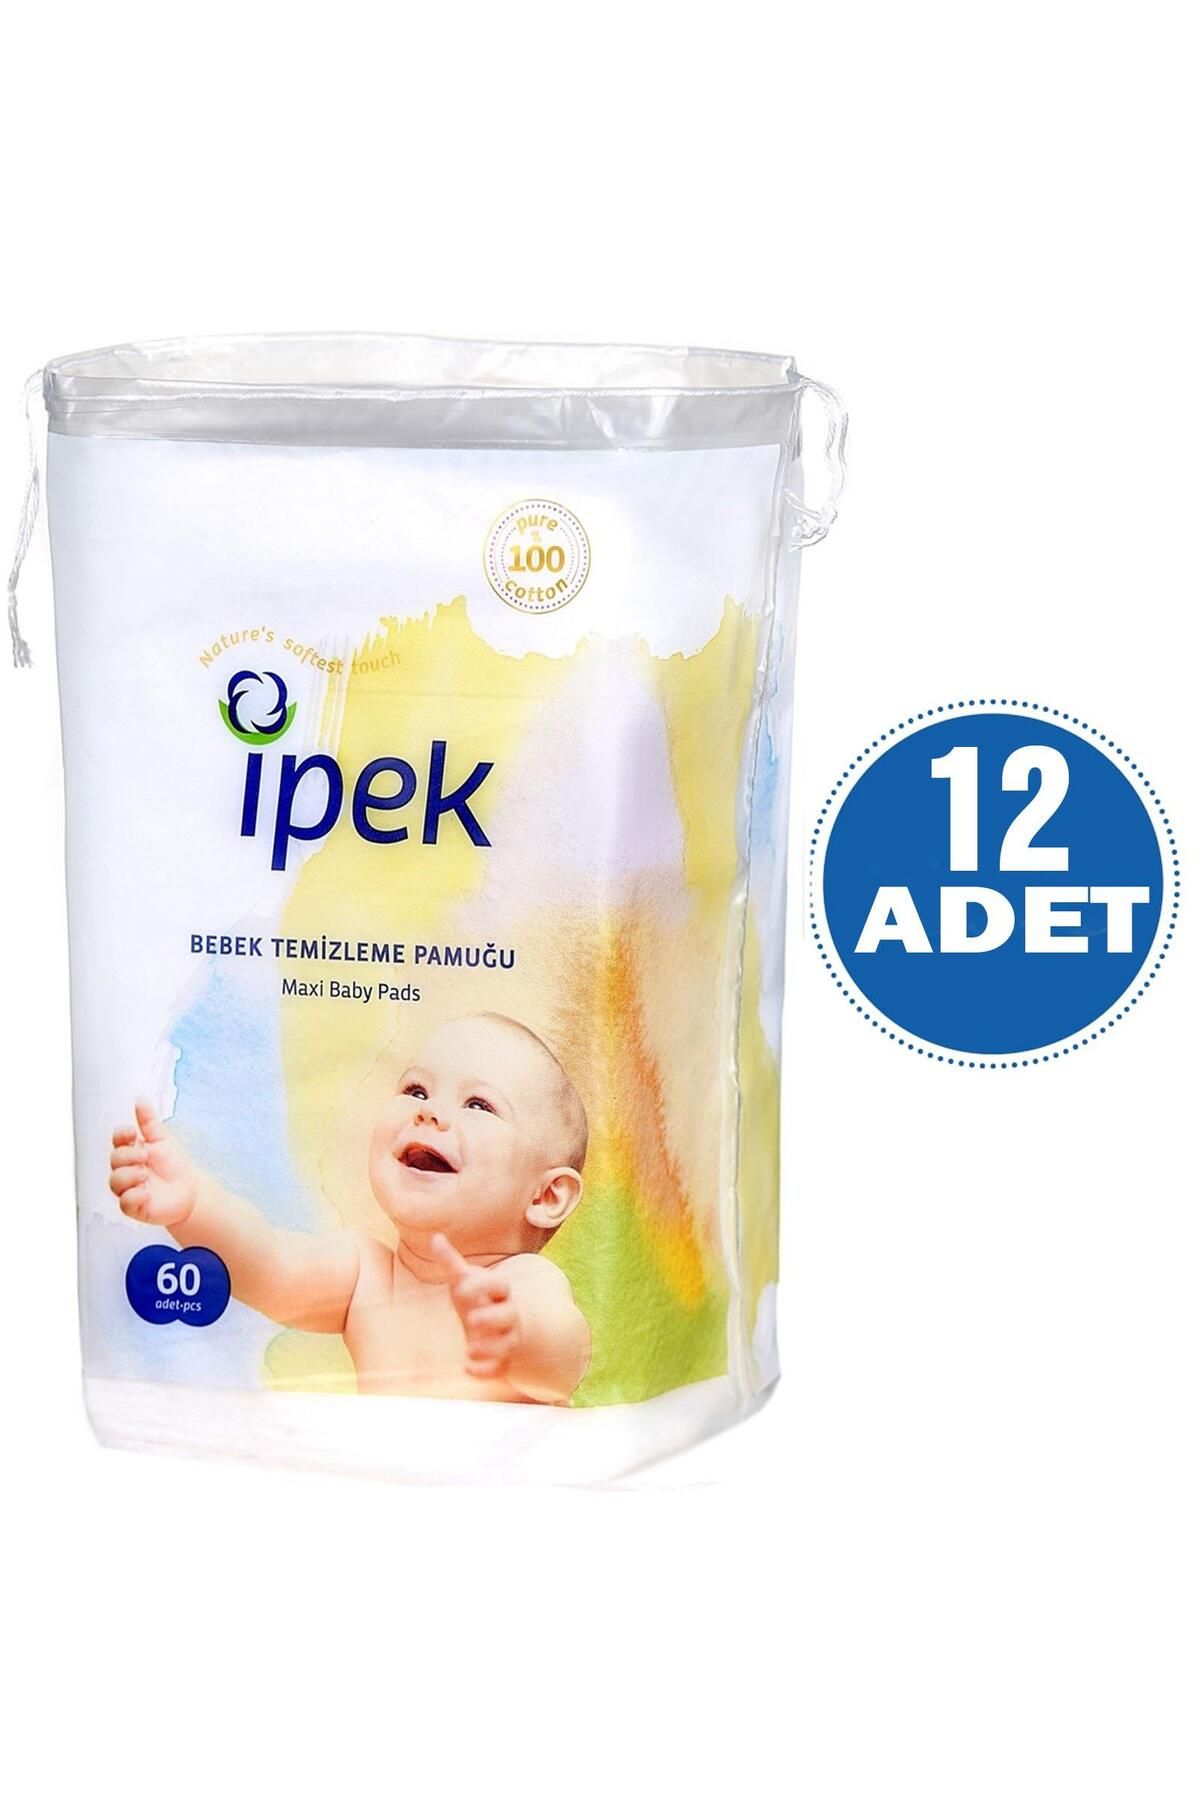 İpek Maxi 60 Lı Bebek Temizleme Pamuğu 12 Paket